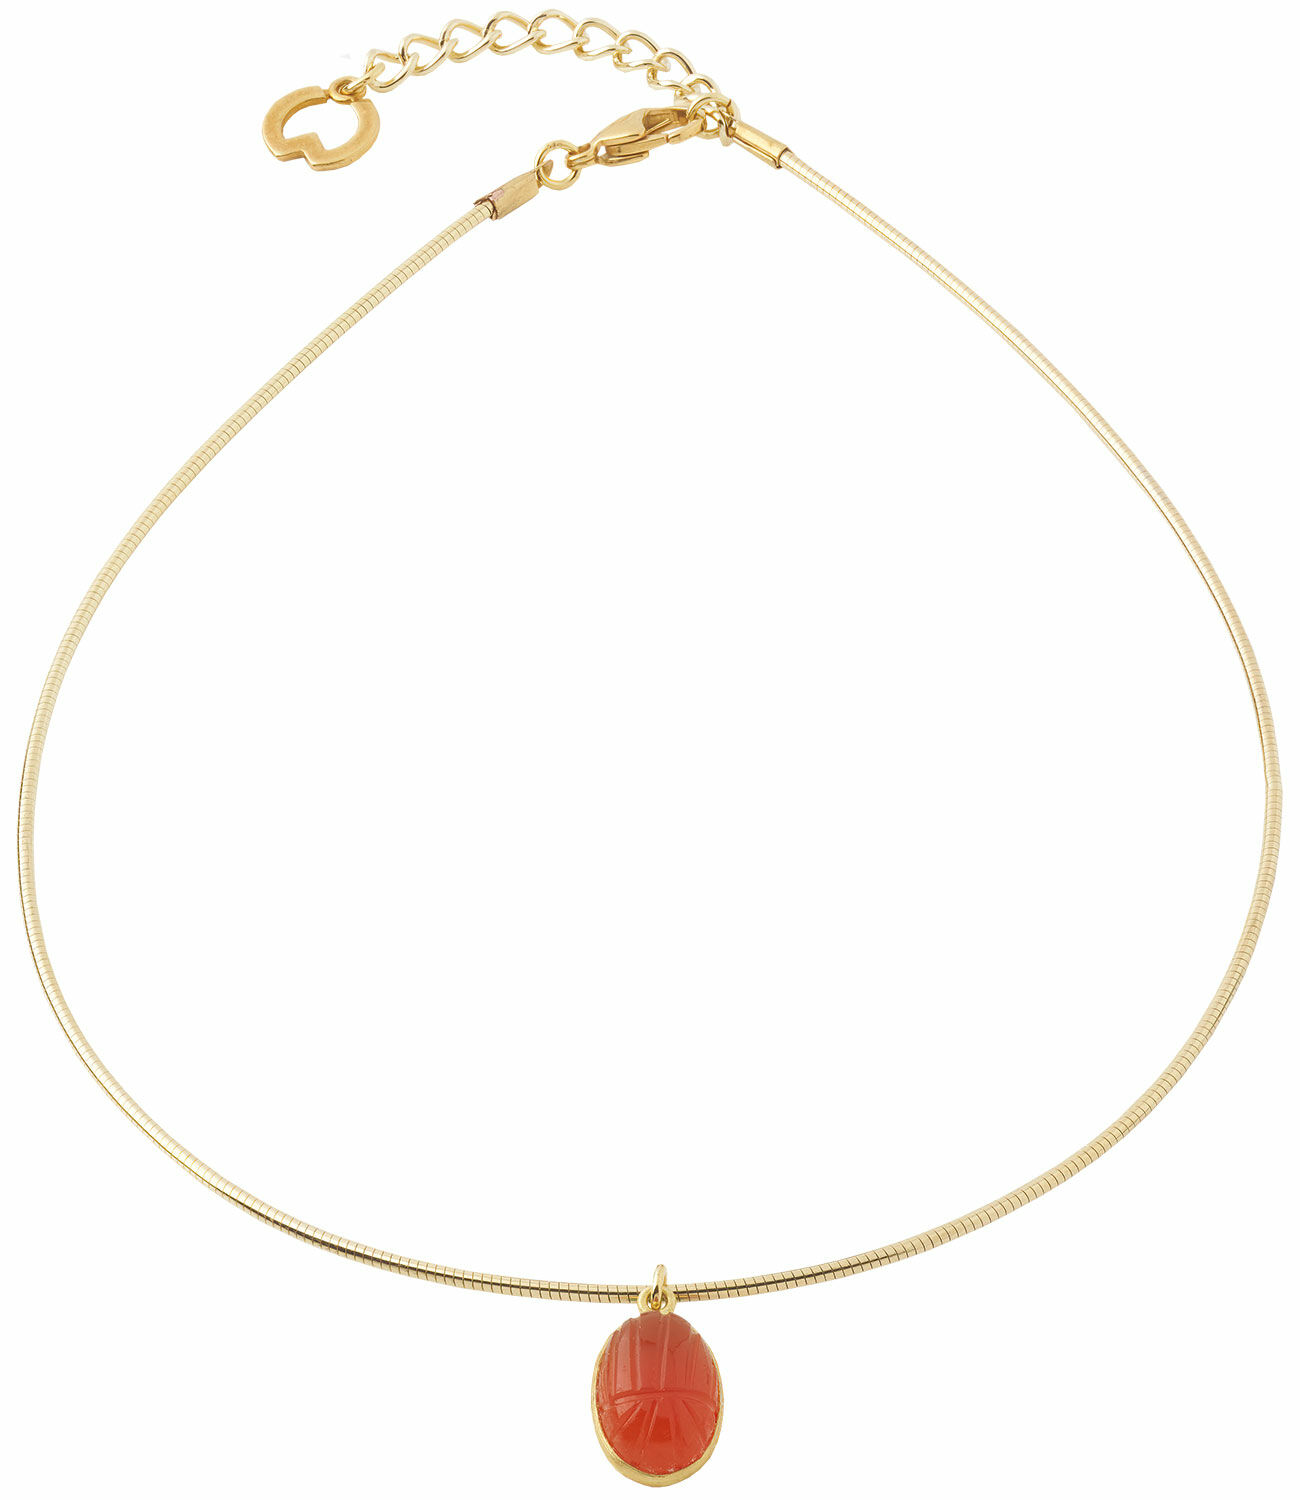 Necklace "Yanara" by Petra Waszak